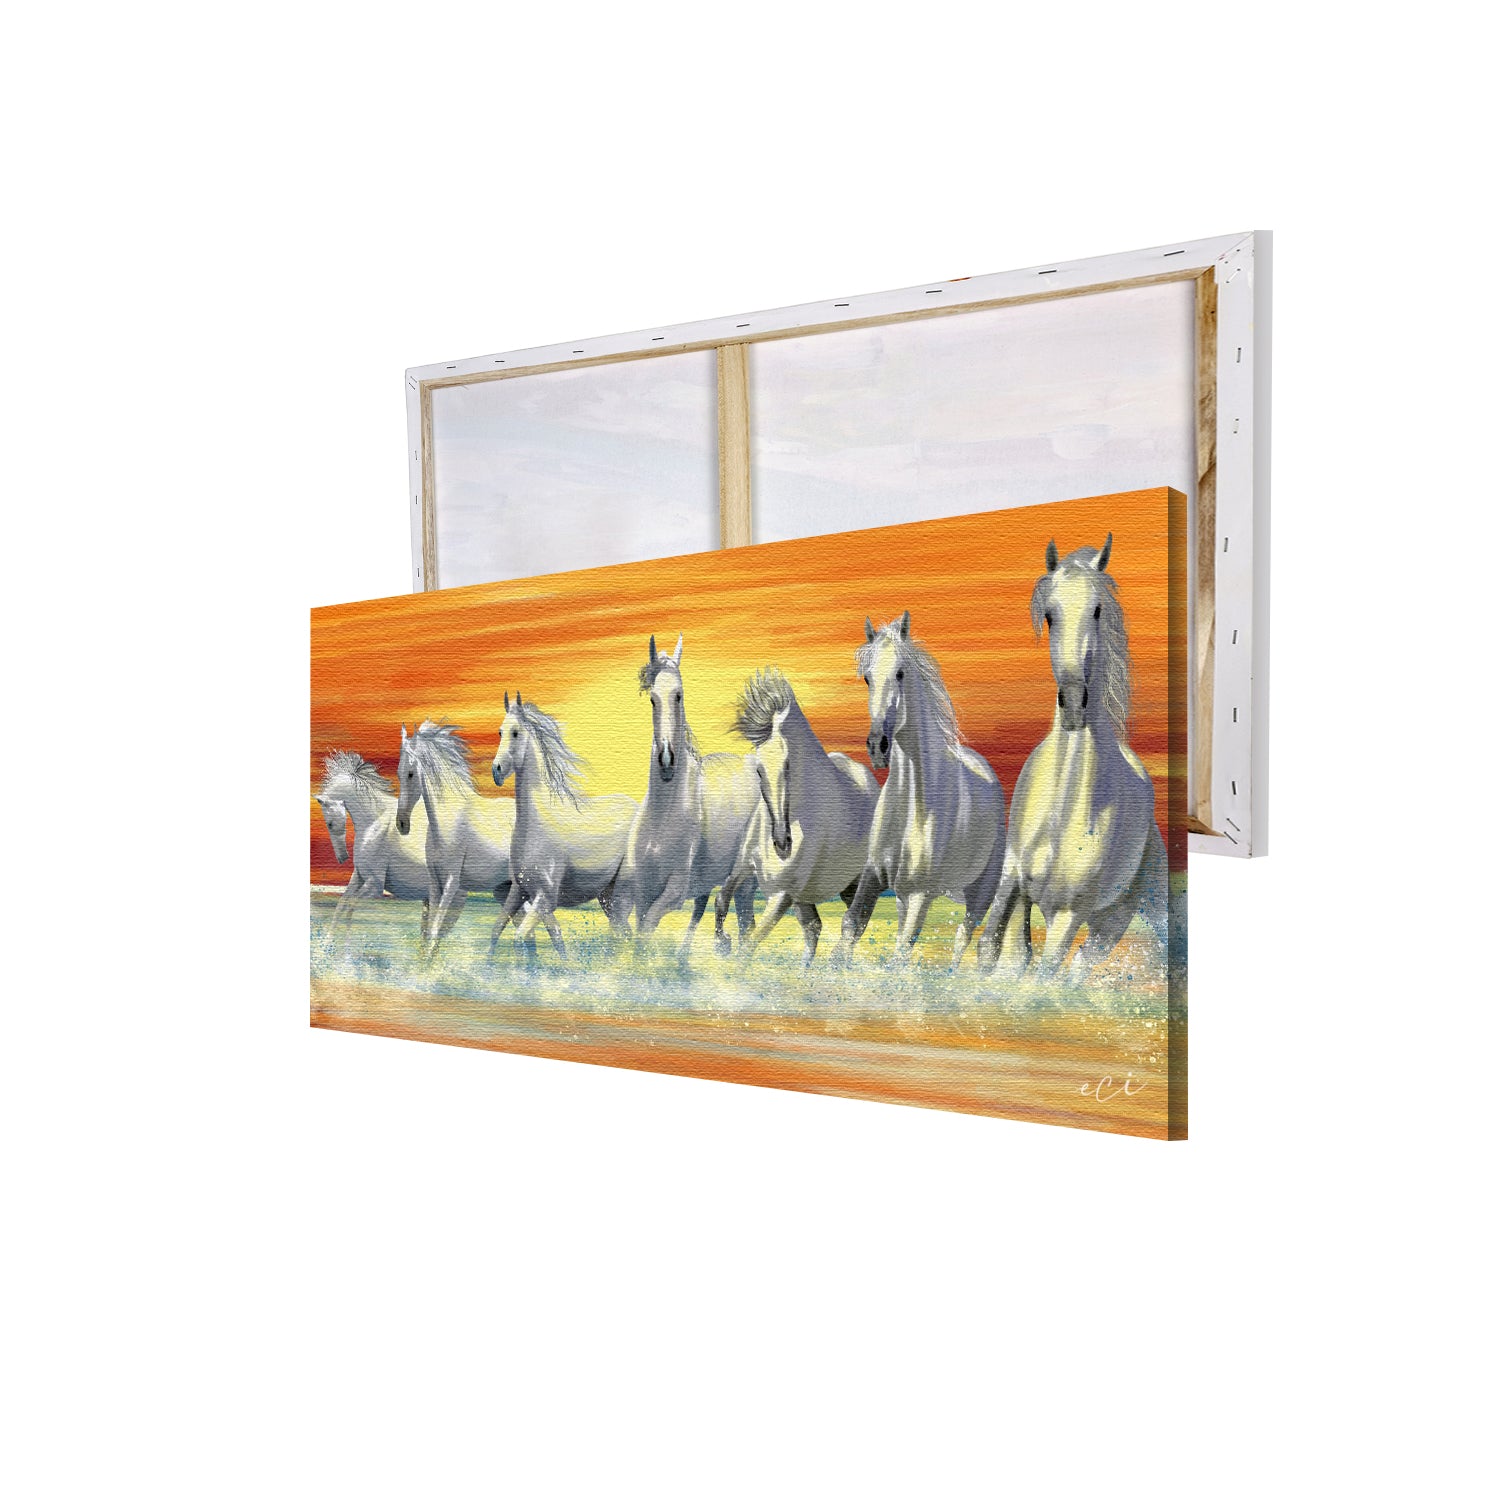 7 White Running Horses Painting Digital Printed Canvas Animal Wall Art 4